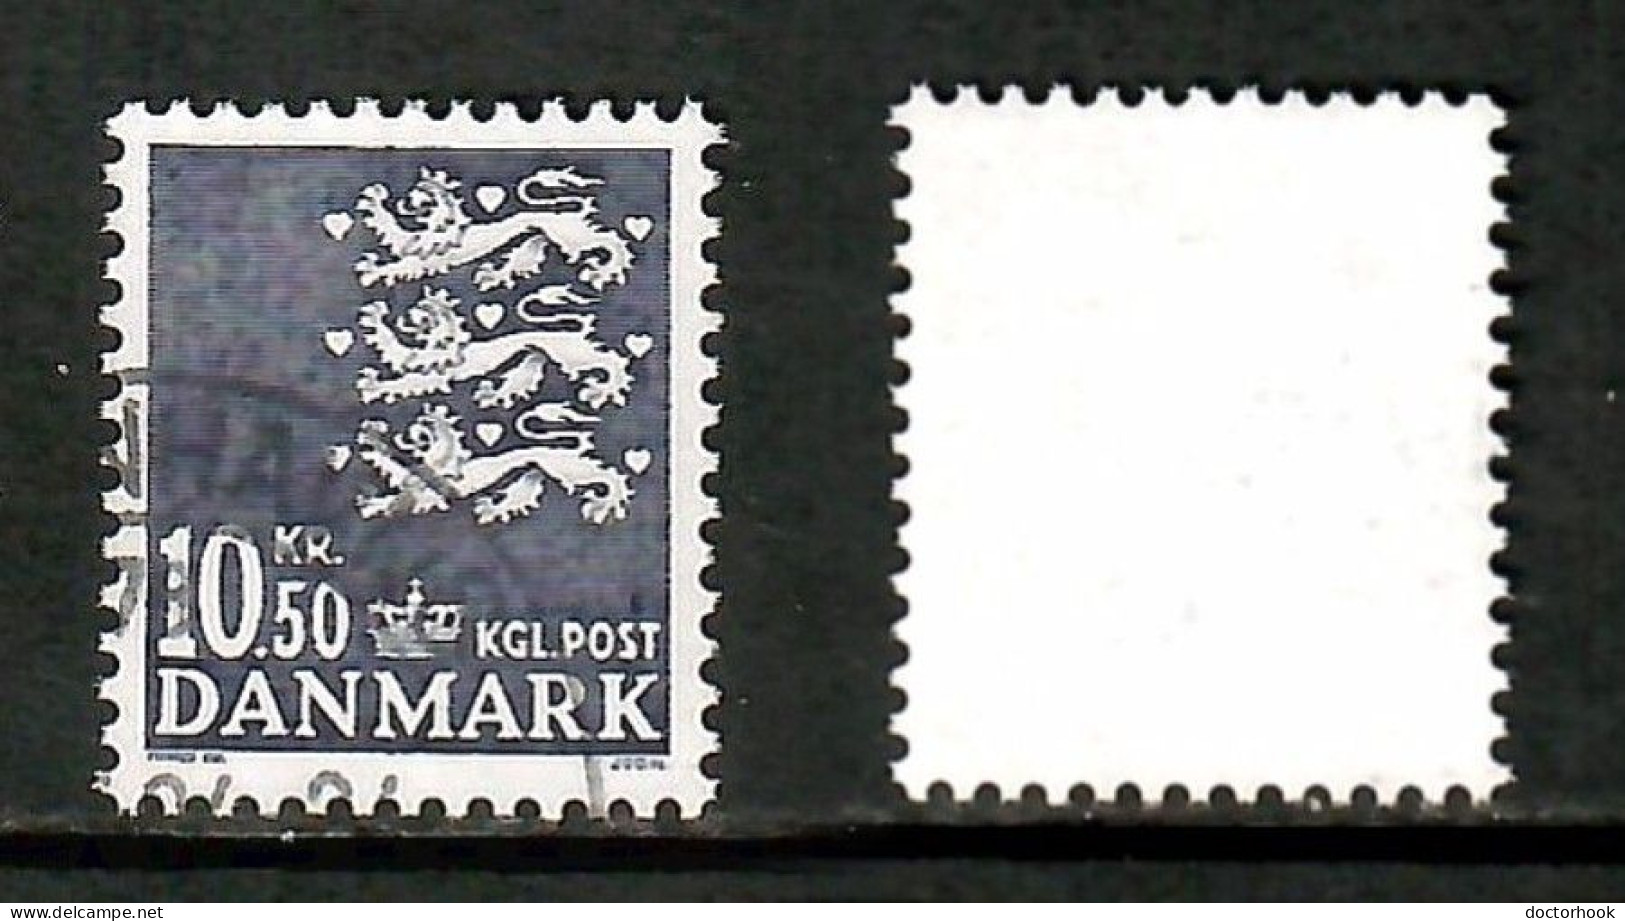 DENMARK   Scott # 1134 USED (CONDITION PER SCAN) (Stamp Scan # 1024-12) - Usado